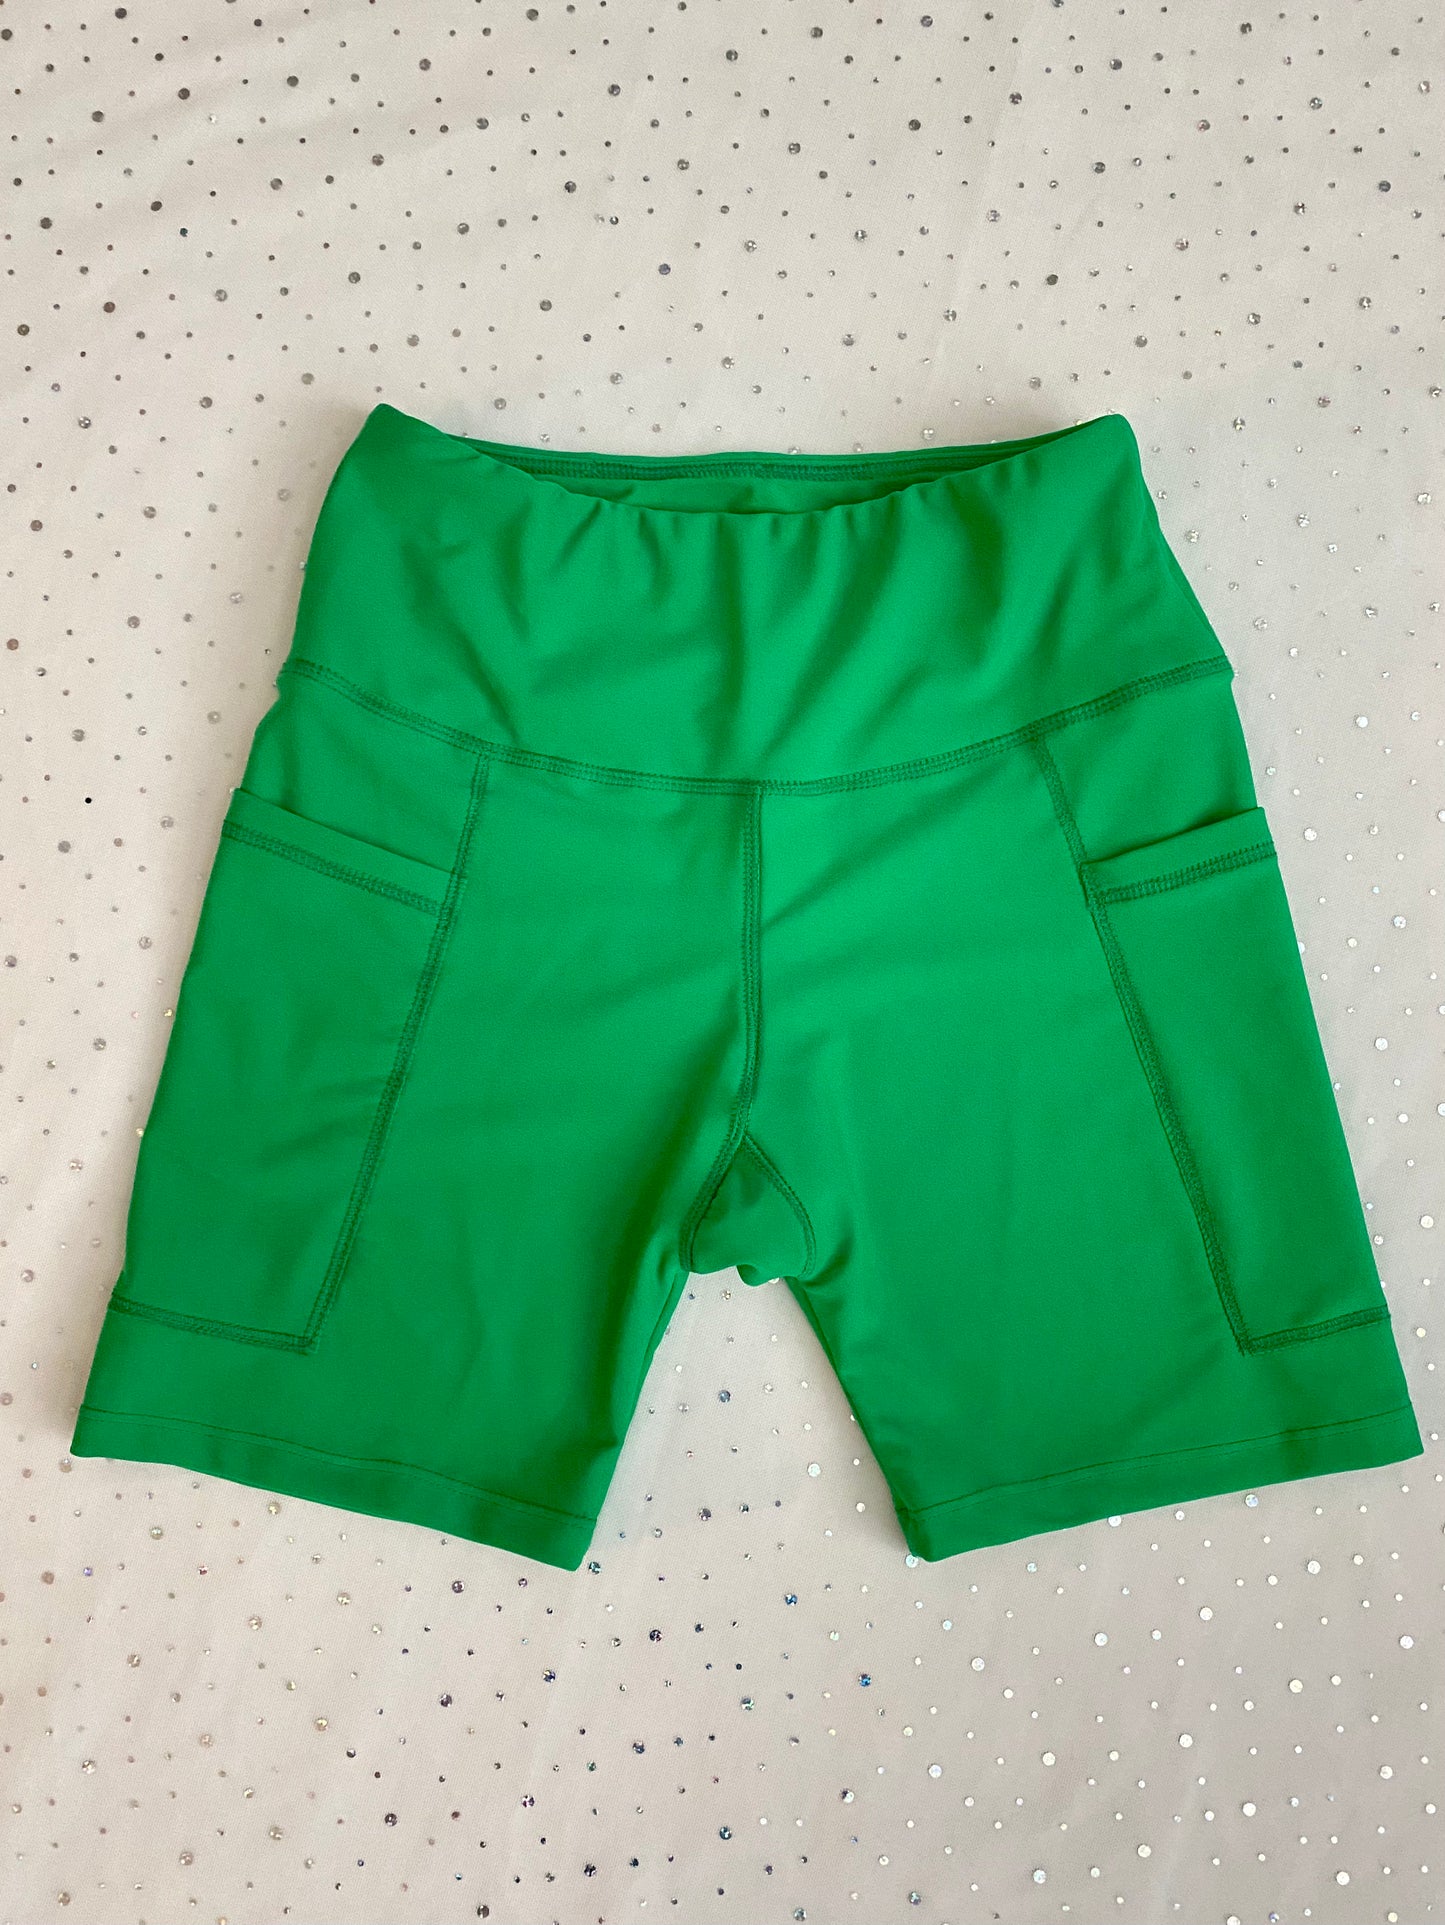 Custom shorts 5" inseam